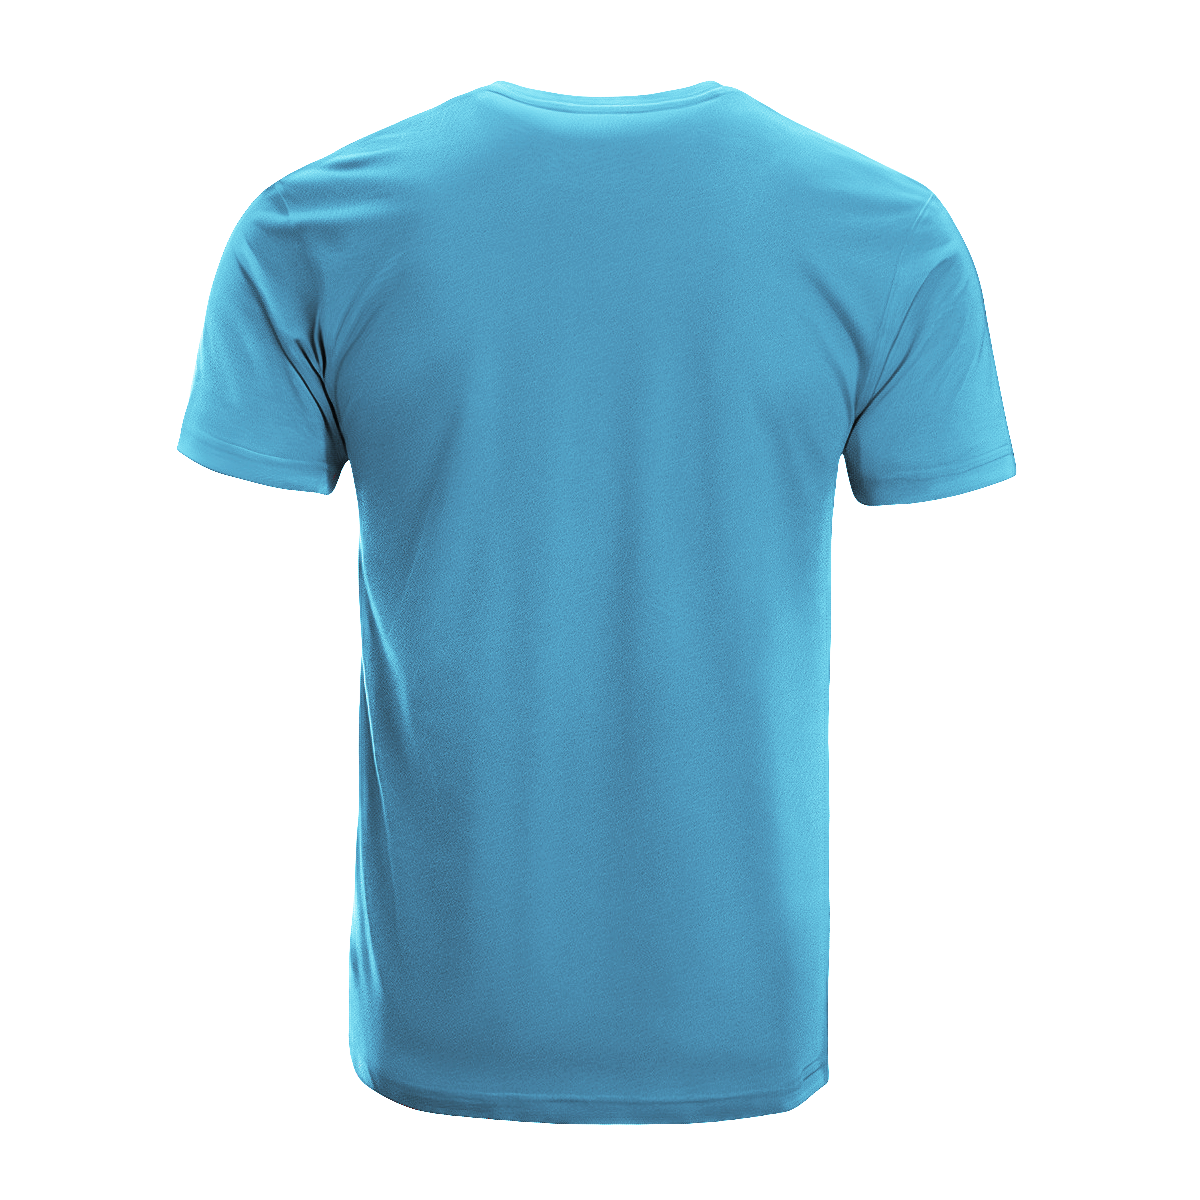 Balfour Tartan Crest T-shirt - I'm not yelling style